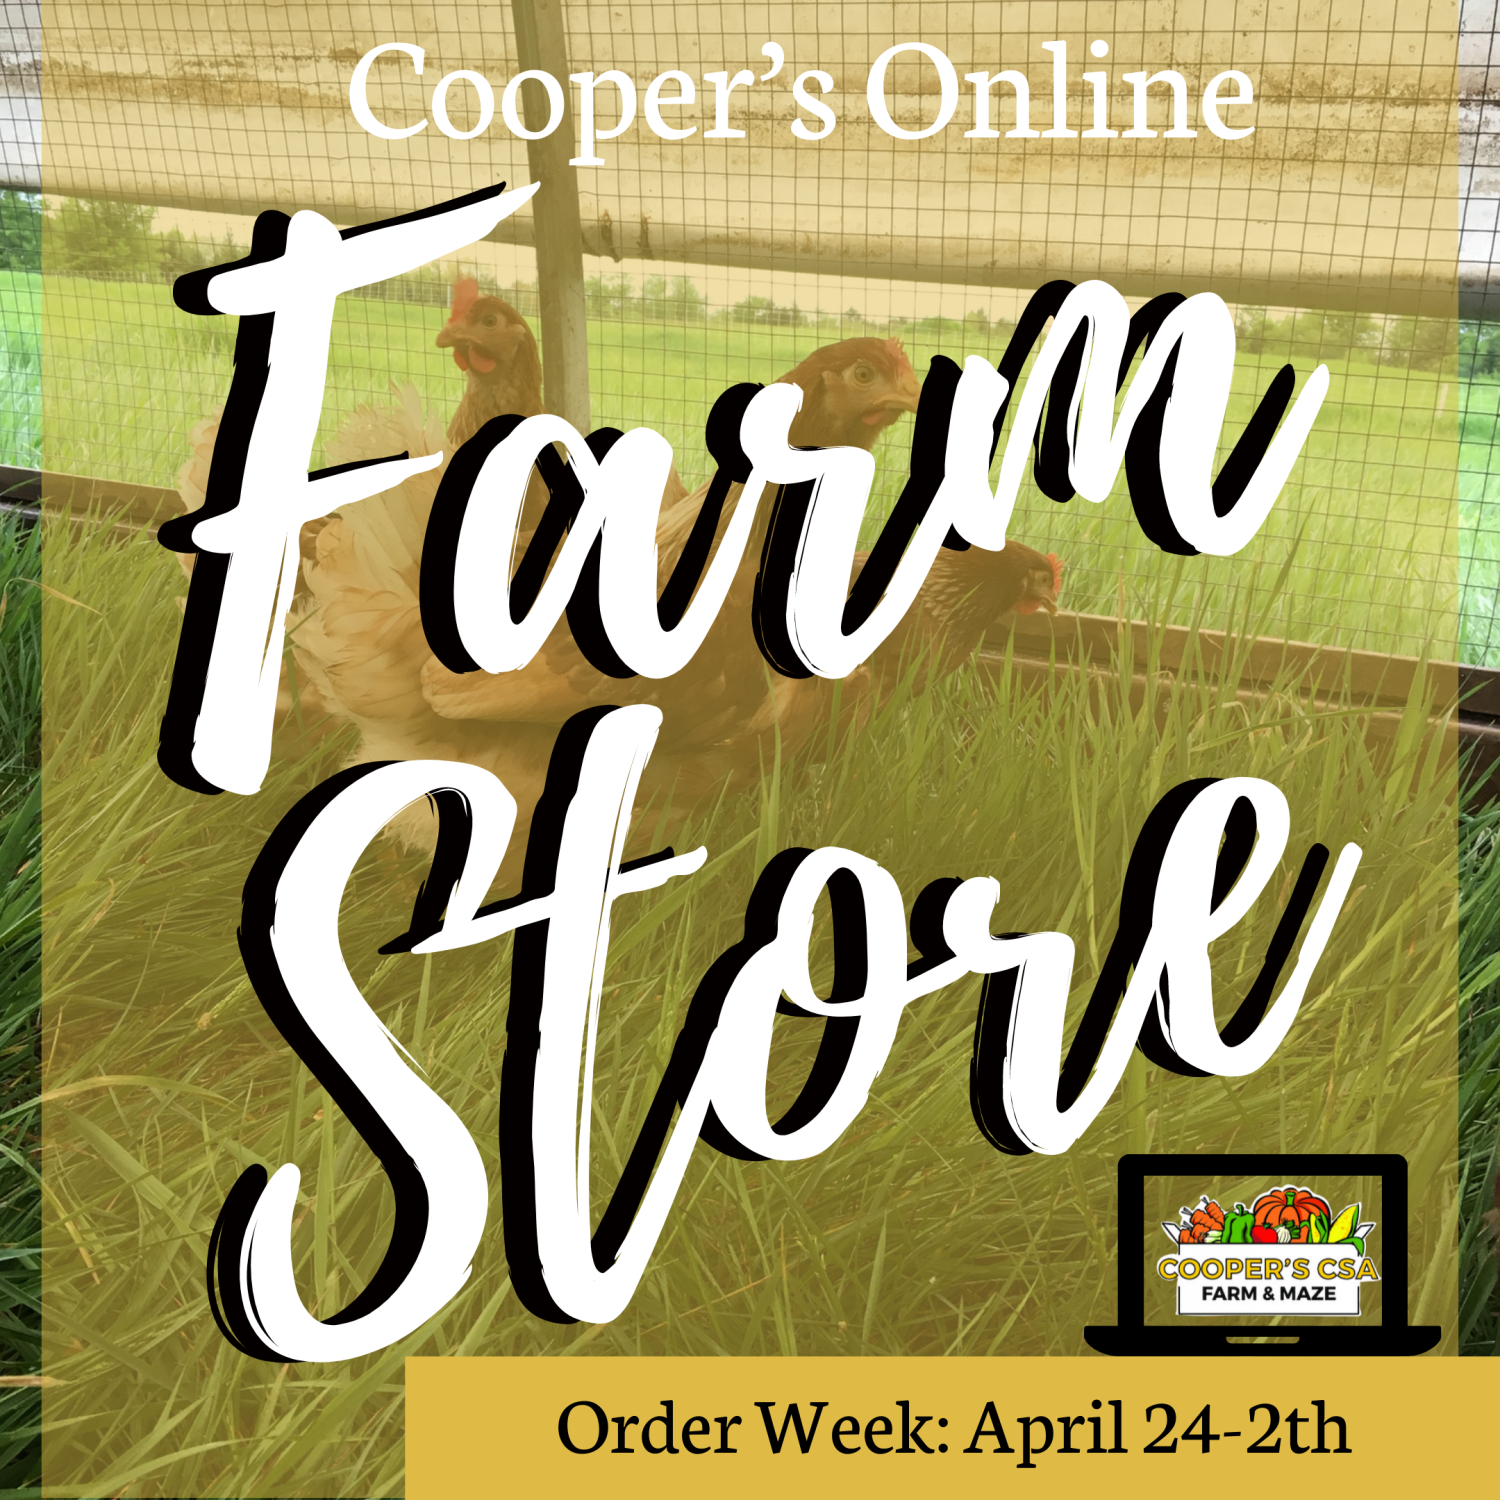 Coopers CSA Online FarmStore- Order Week April 24-27th